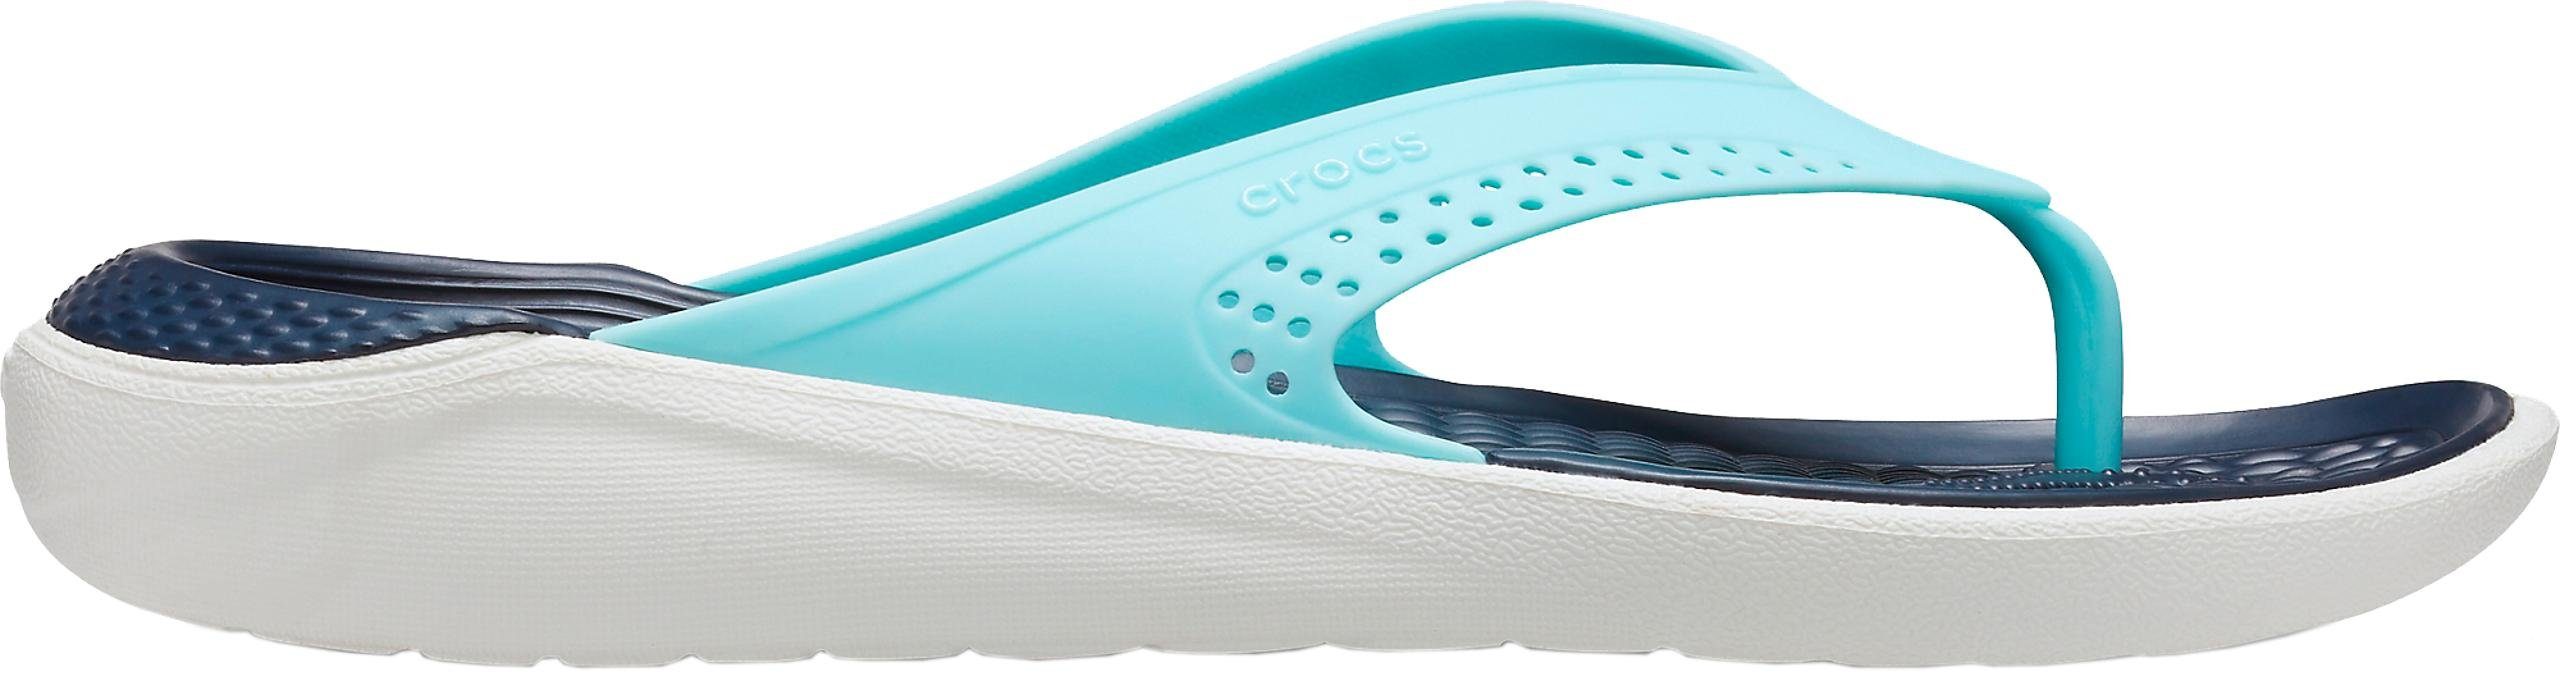 Crocs CROCS TM SHOES Lite Ride Flip Damen Pantoletten ice blue,  Einlegesohle aus LiteRide Schaum T-Strap-Zehentrenner